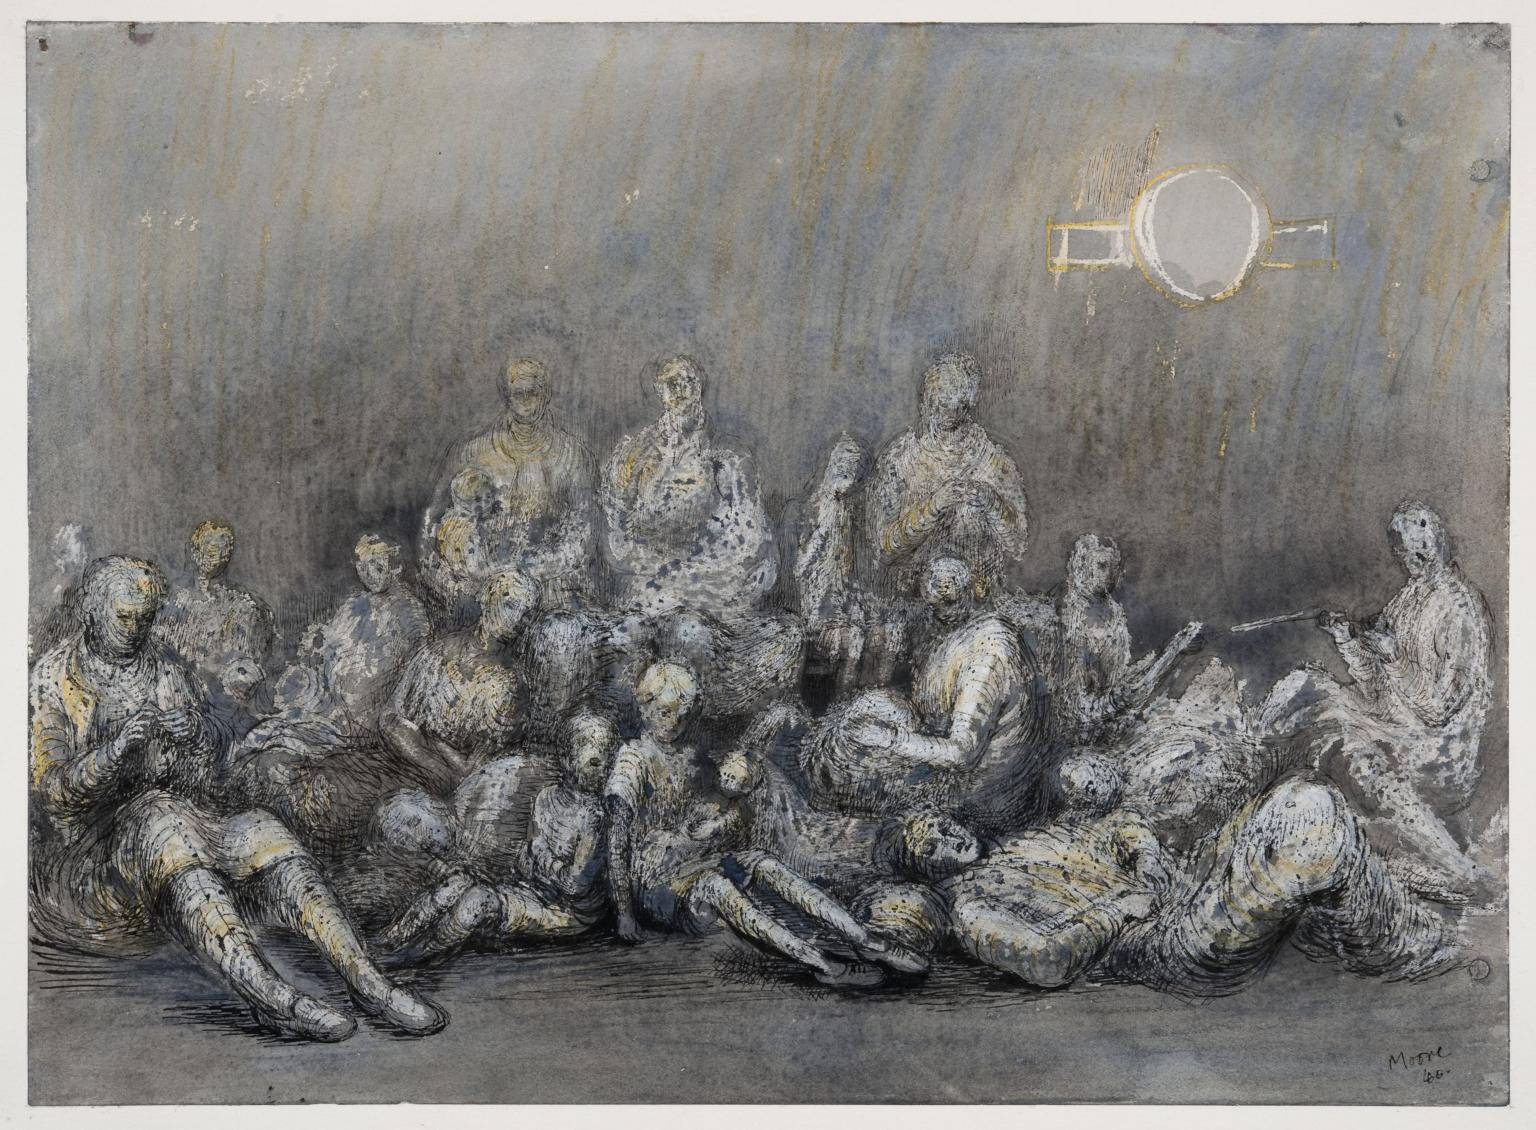 Grey Tube Shelter', Henry Moore OM, CH, 1940 | Tate